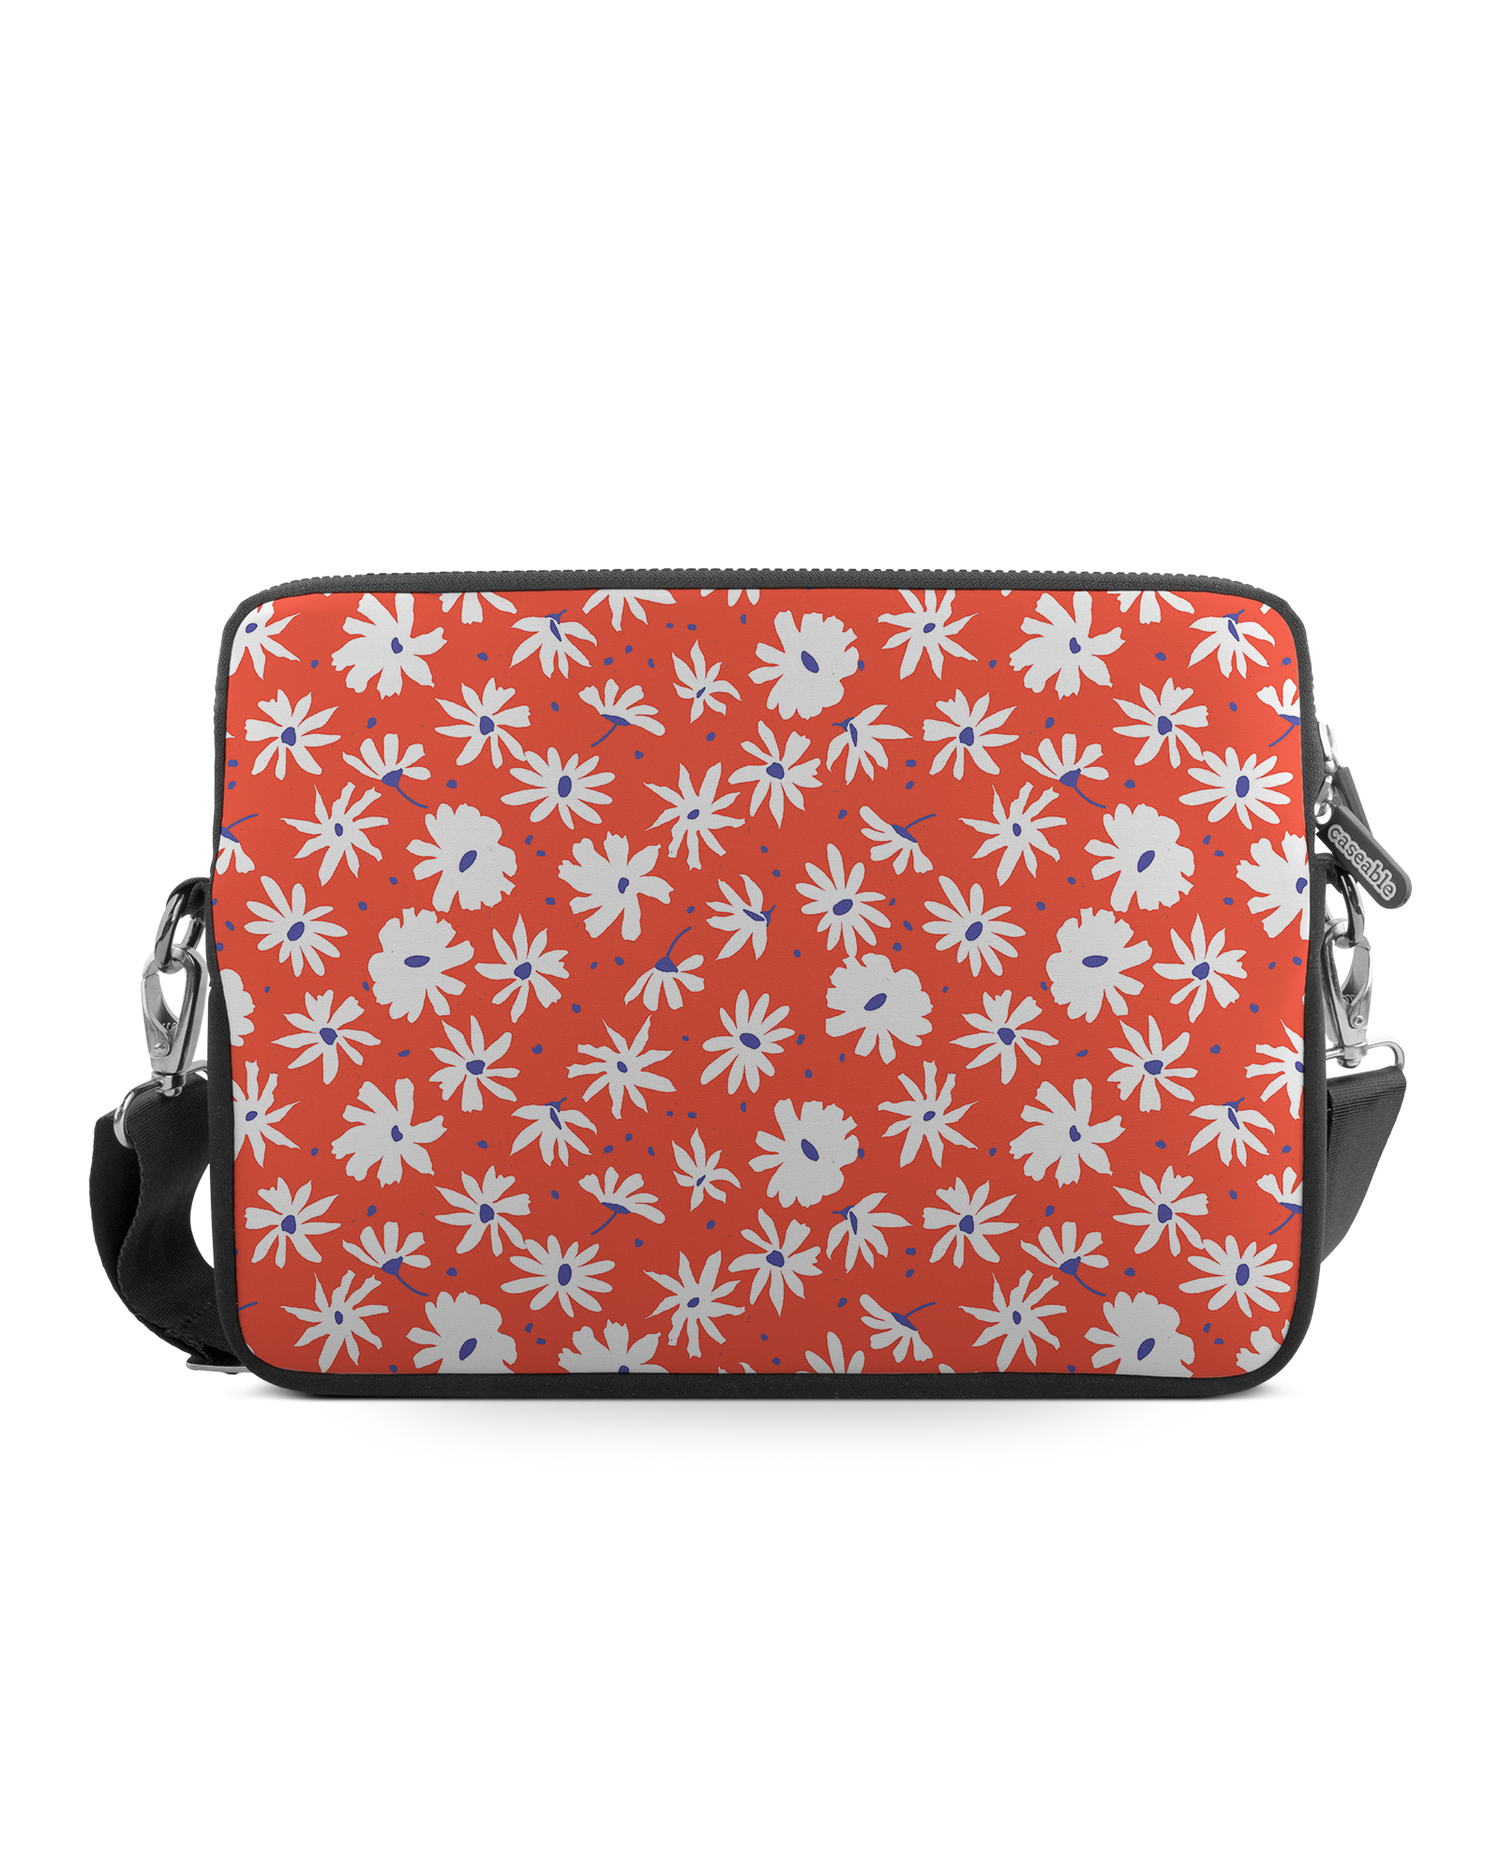 Retro Daisy Premium Laptop Bag 17 inch: Front View